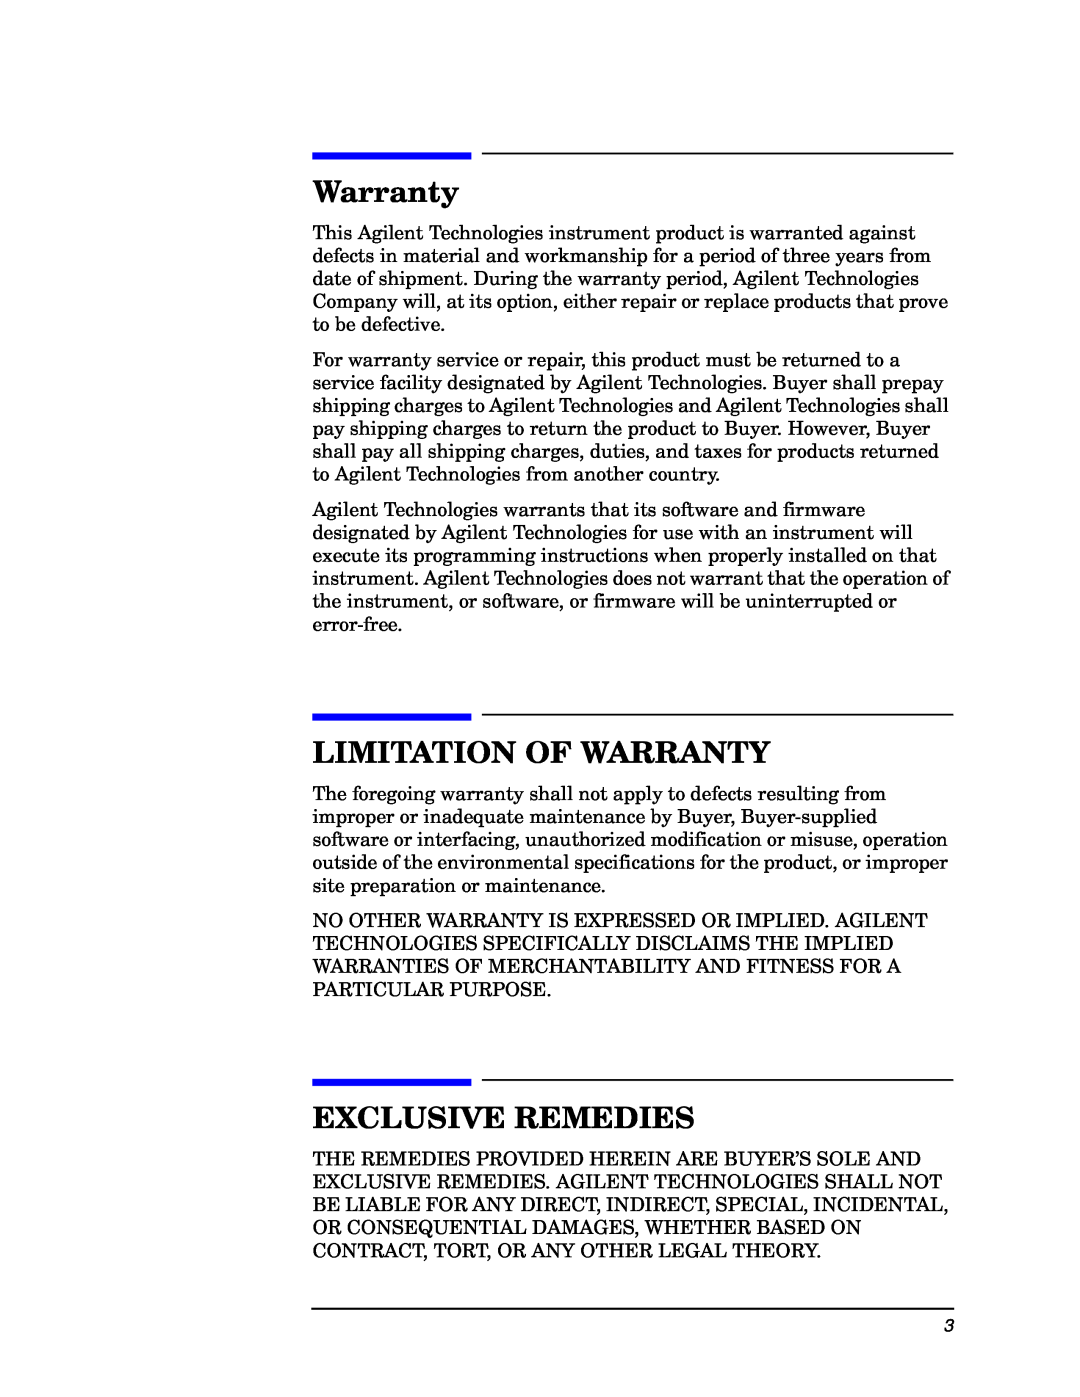 Agilent Technologies E4406A manual Limitation Of Warranty, Exclusive Remedies 